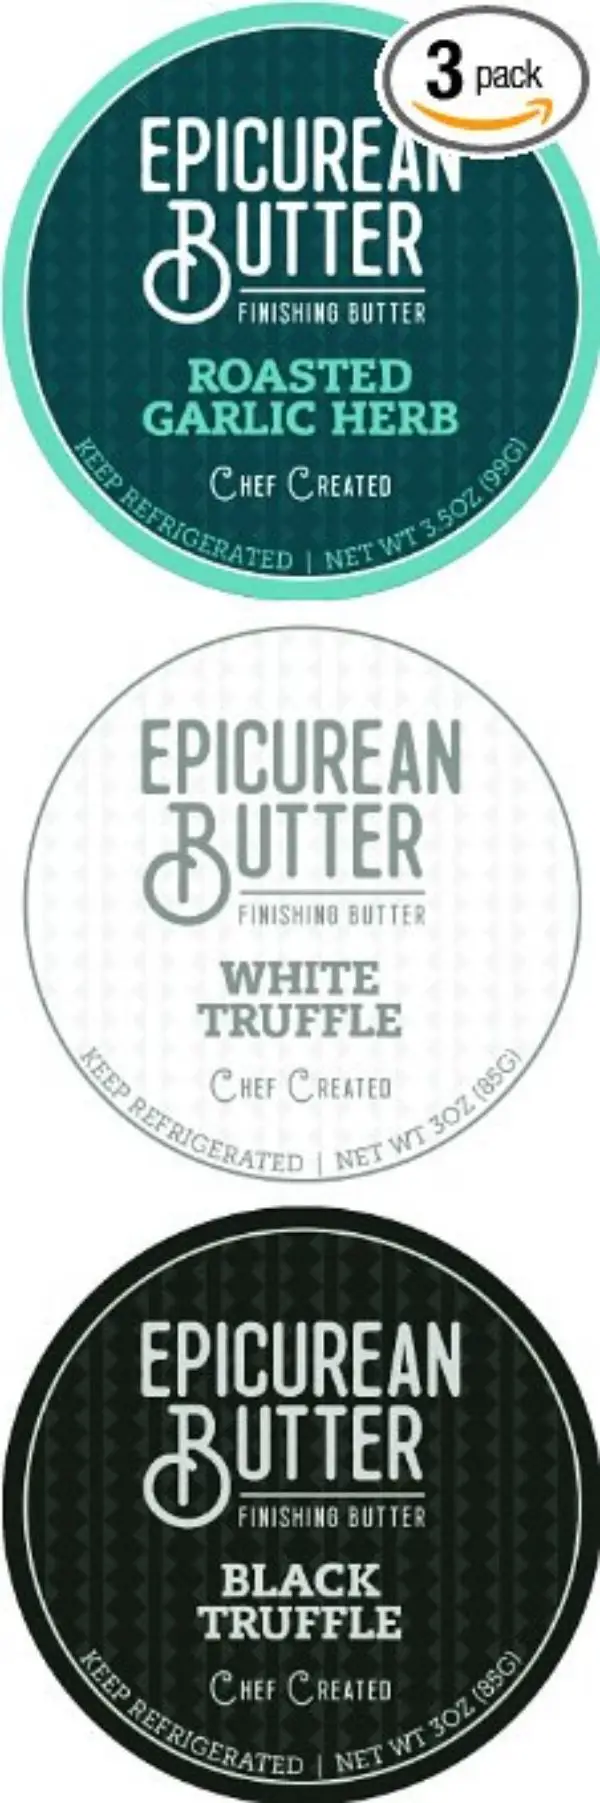 Epicurean Butter Variety Pack